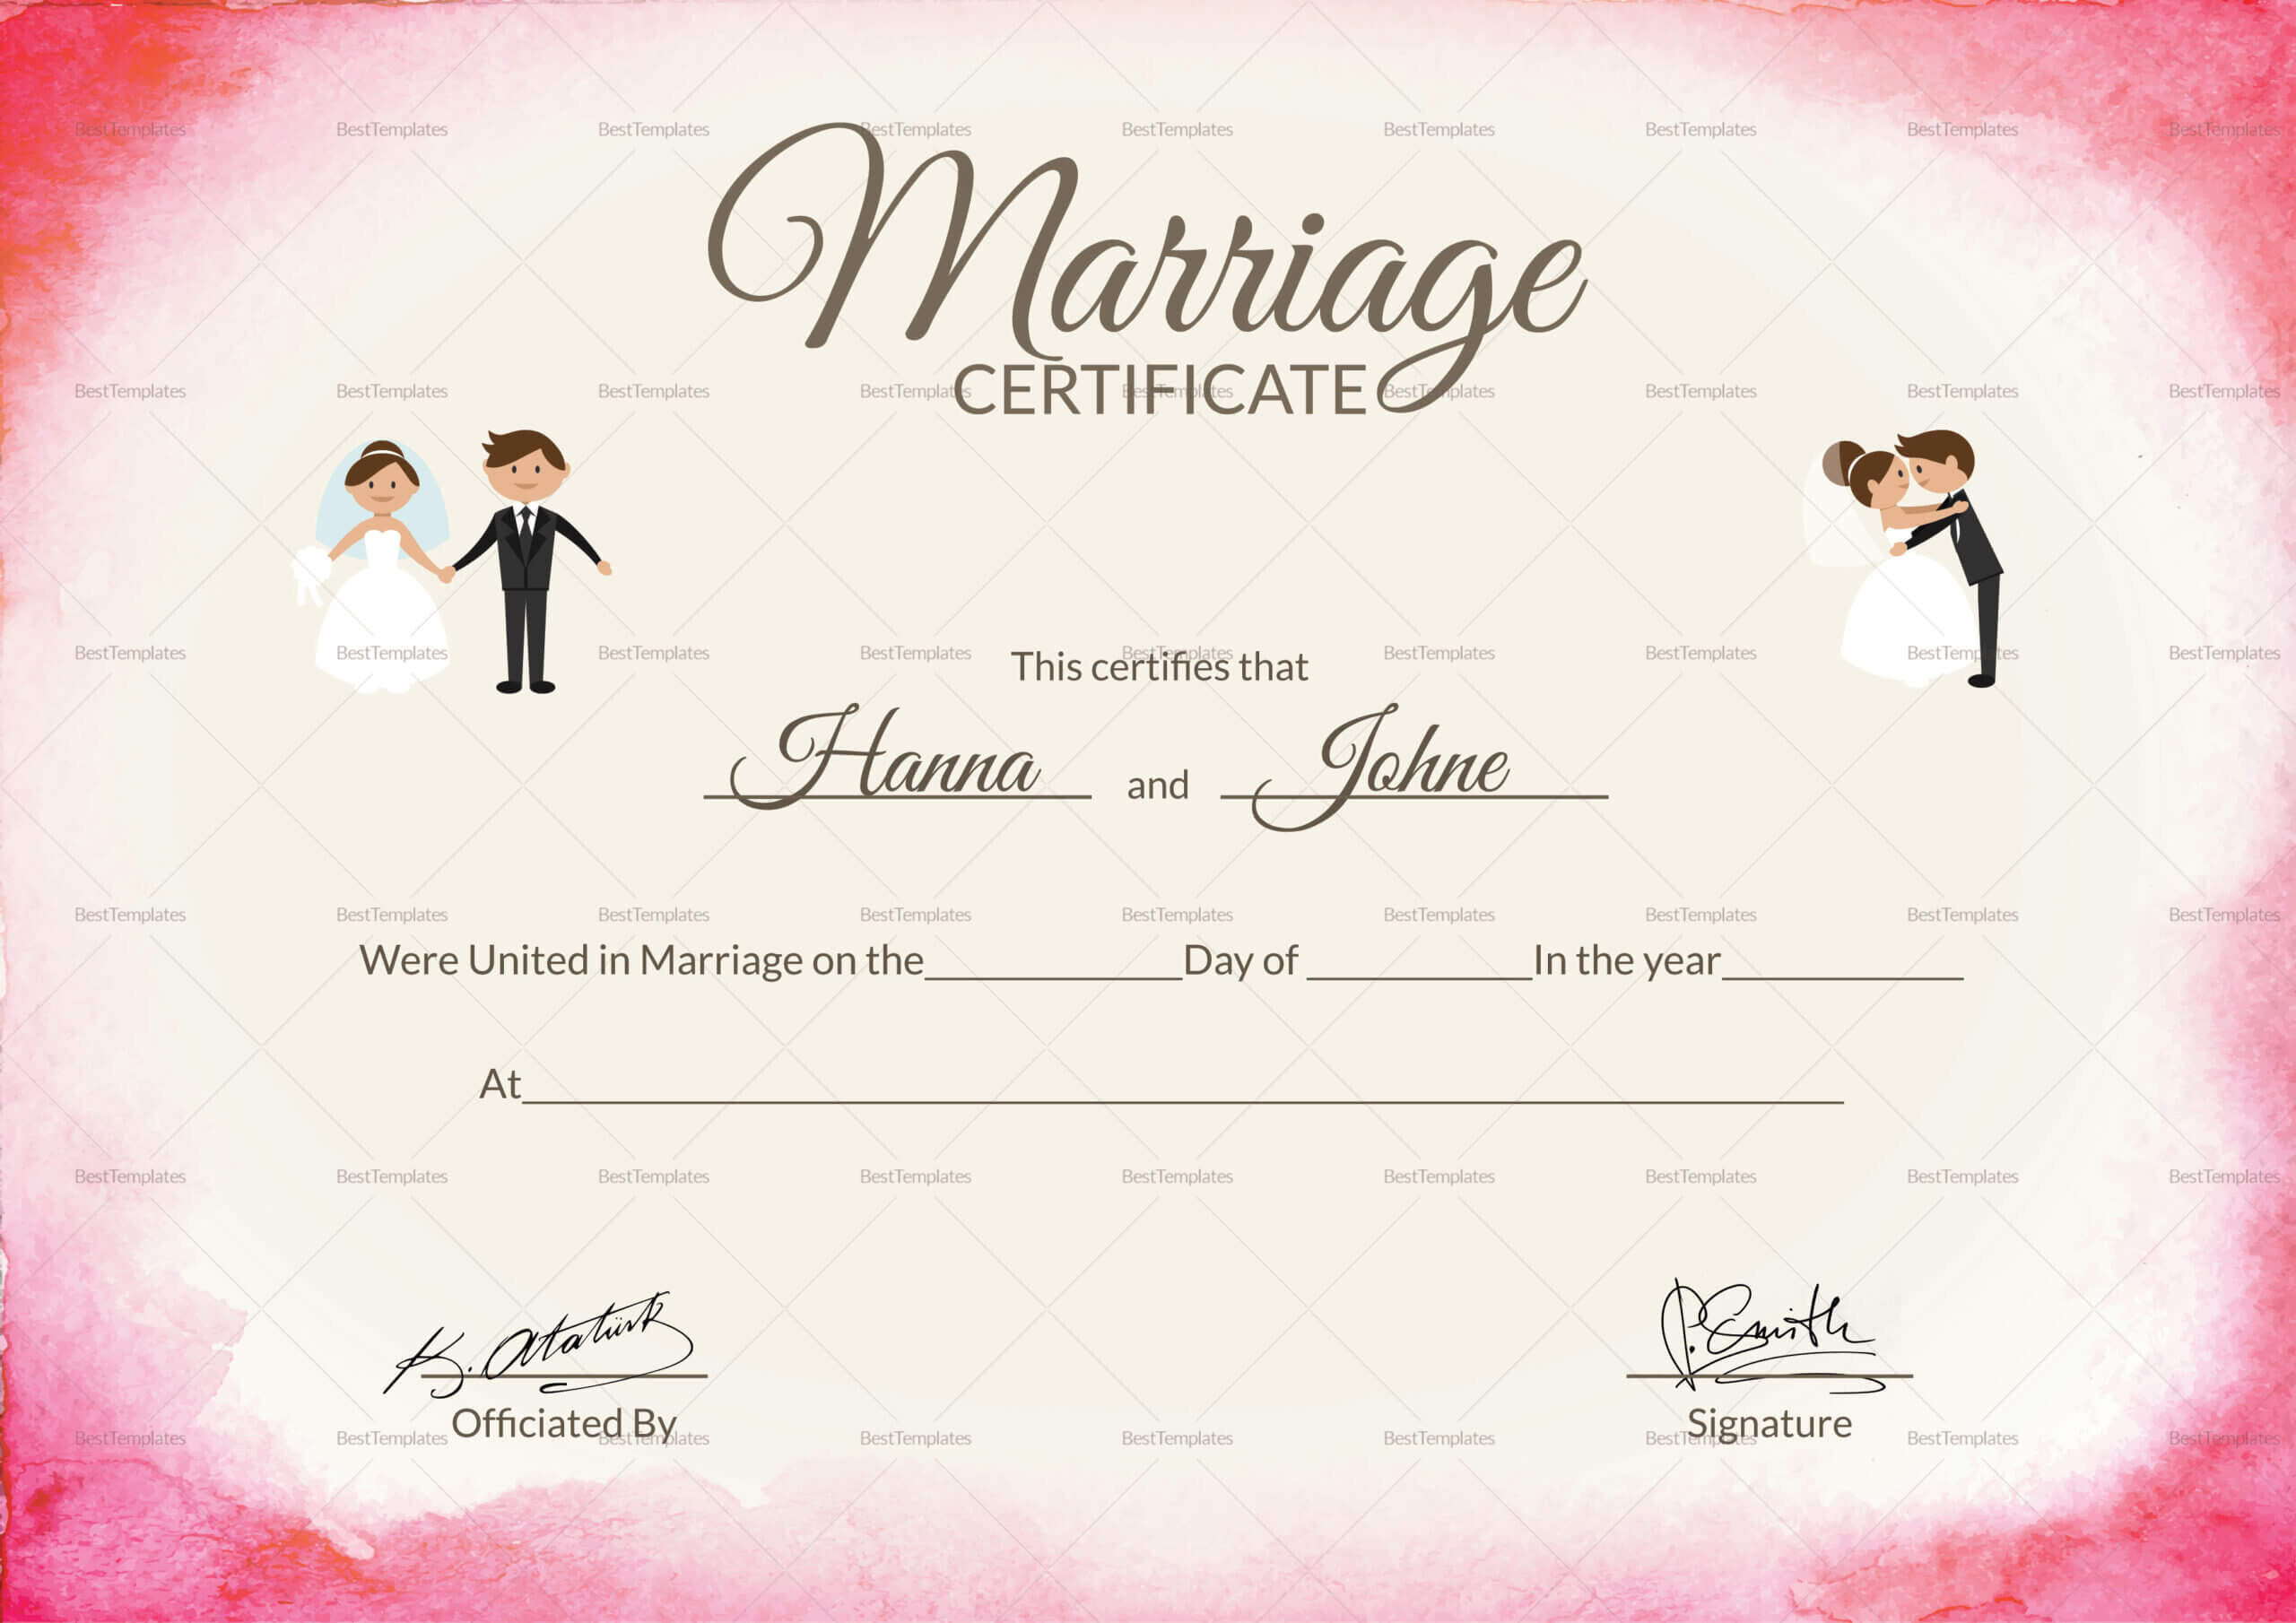 031 Certificate Of Marriage Template Certificate28129 With Certificate Of Marriage Template